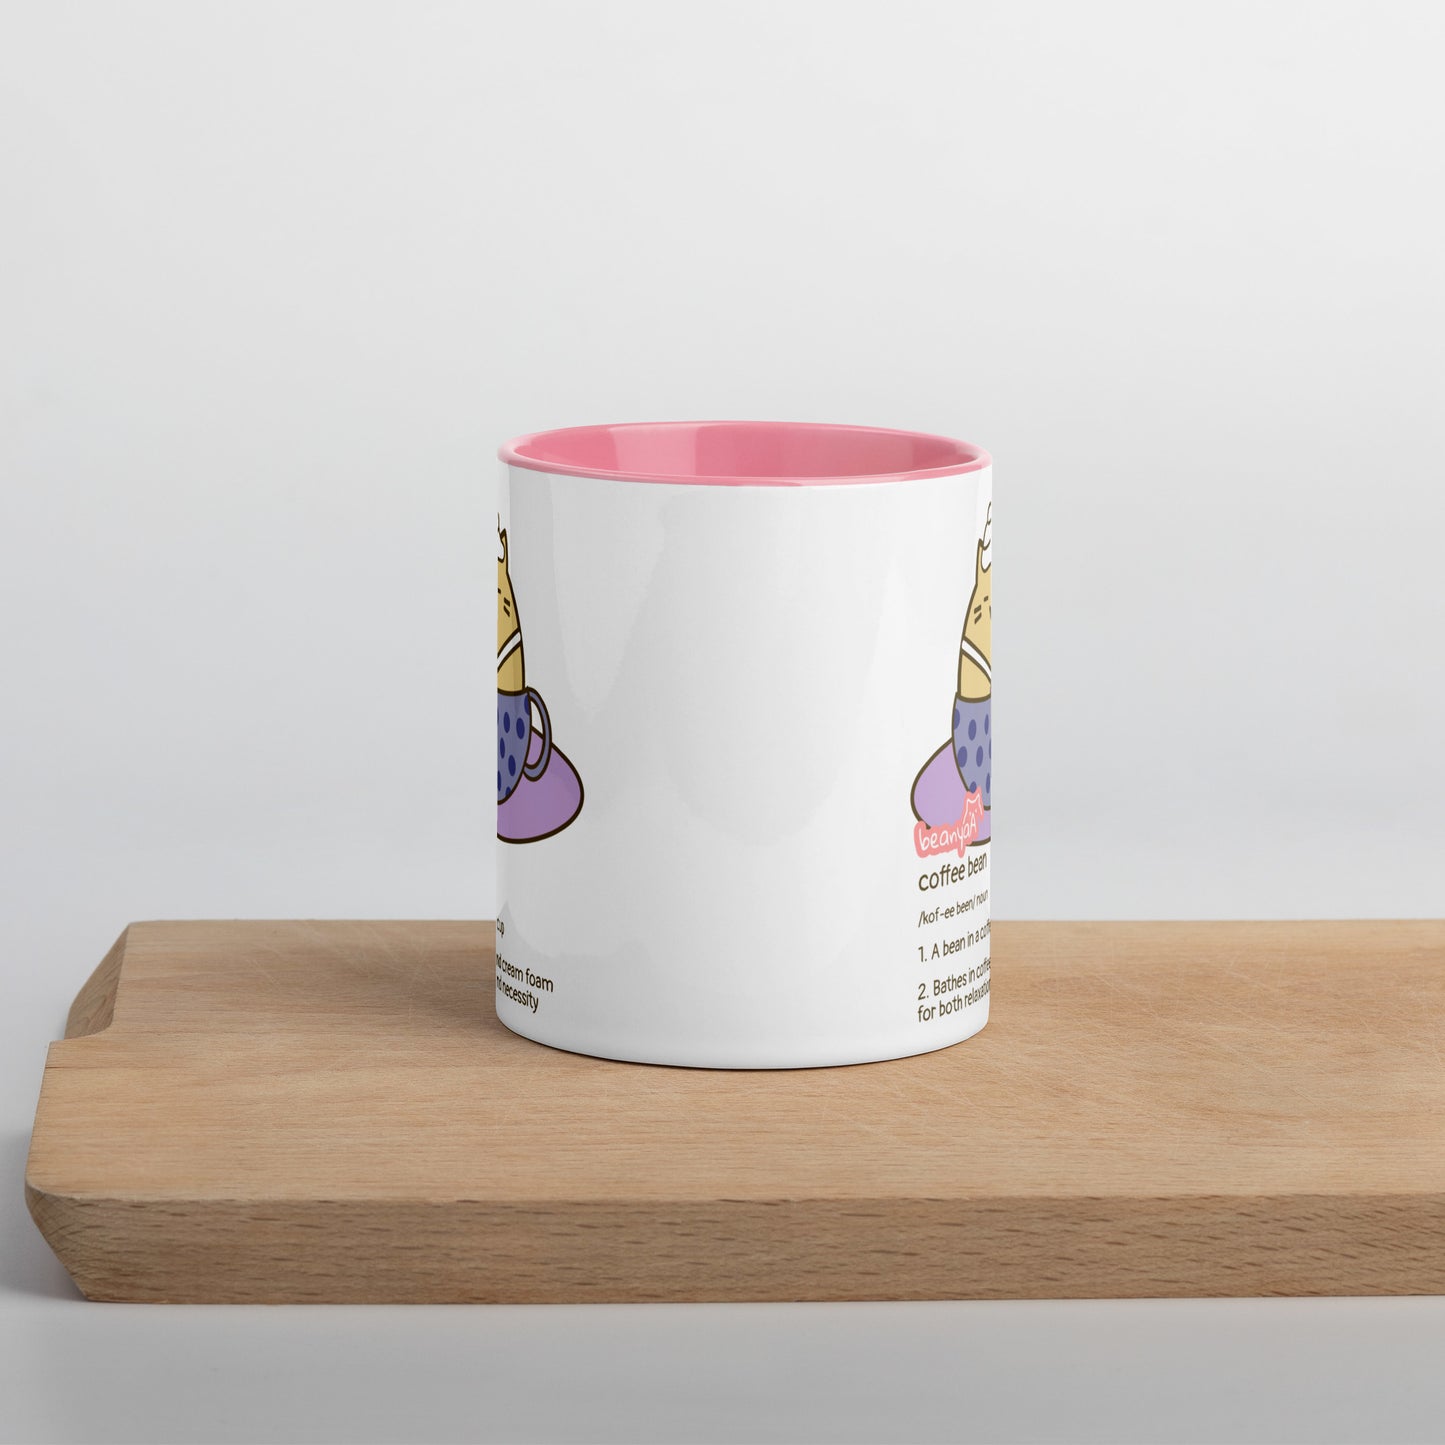 Coffee bean mug